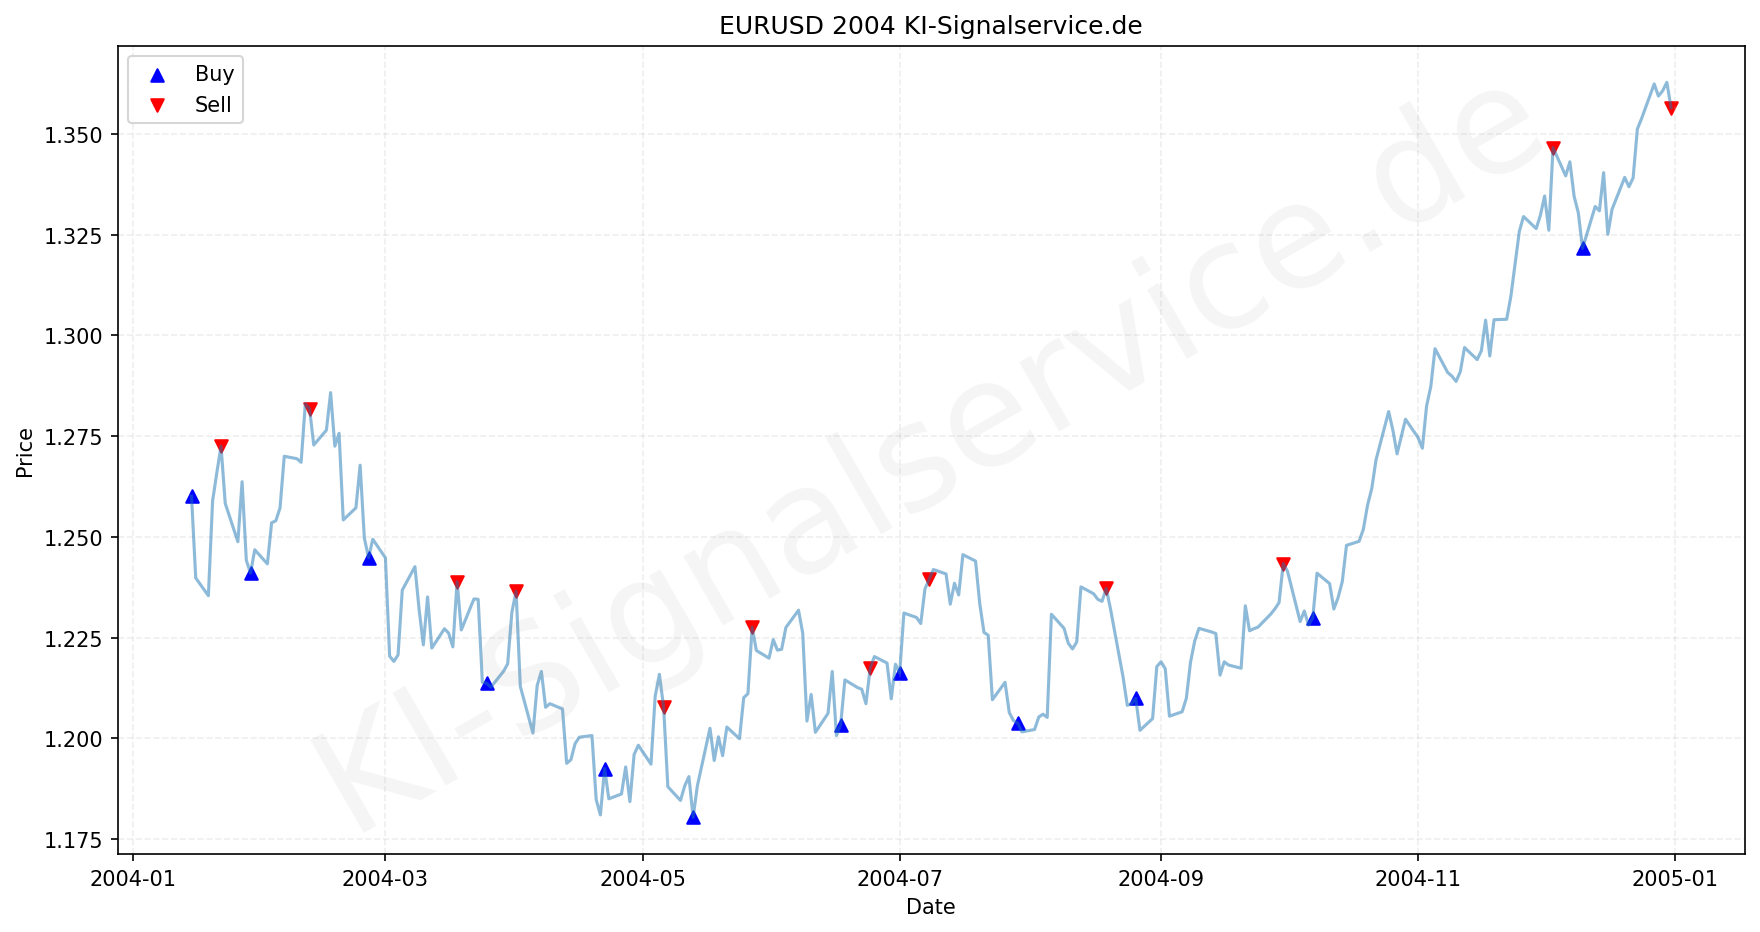 EURUSD Chart - KI Tradingsignale 2004